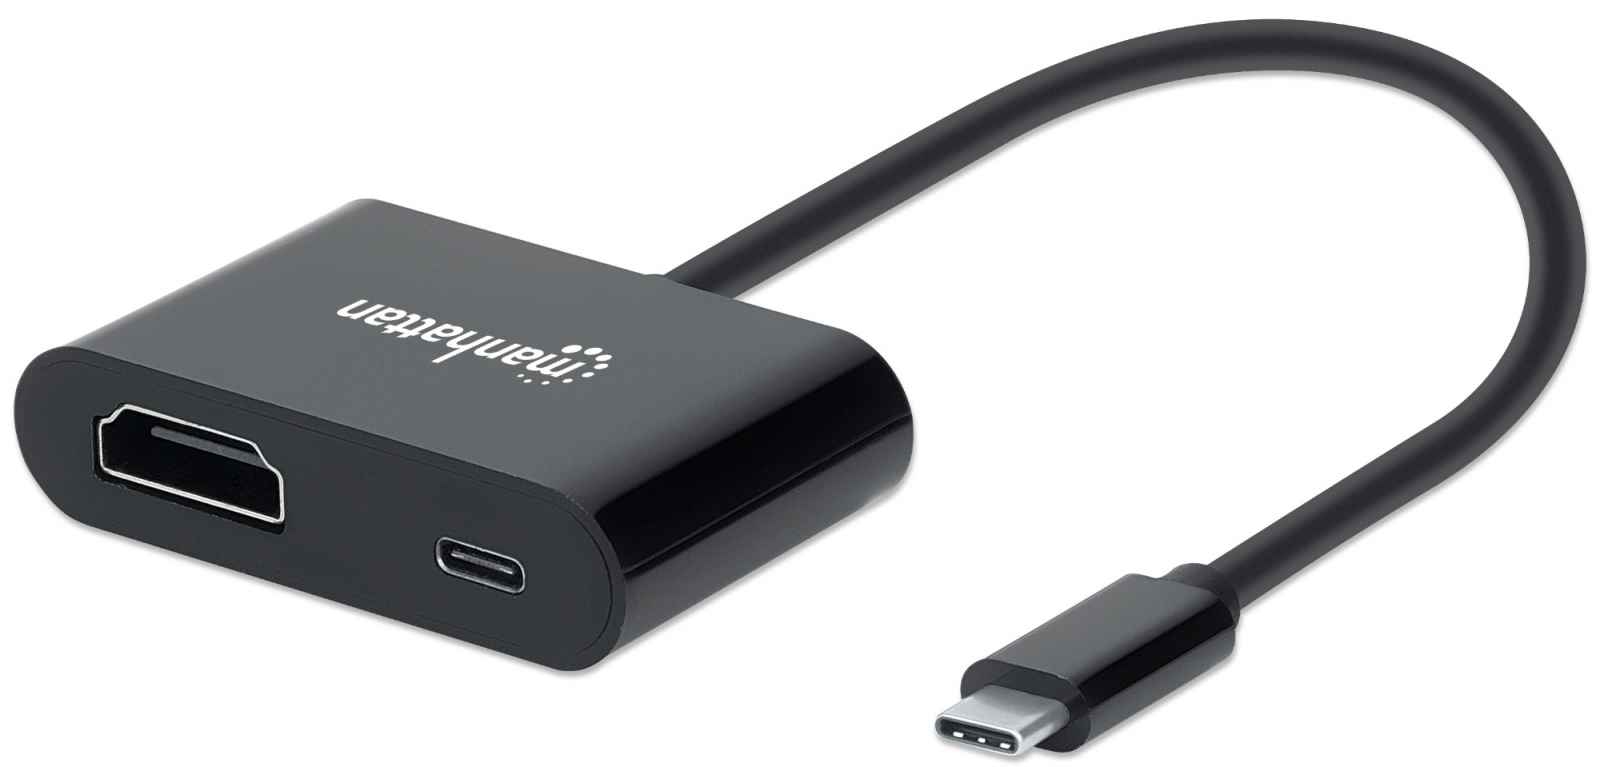 Manhattan USB-C to HDMI and USB-C (inc Power Delivery), 4K@60Hz, 19.5cm, Black, Power Delivery to USB-C Port (60W)